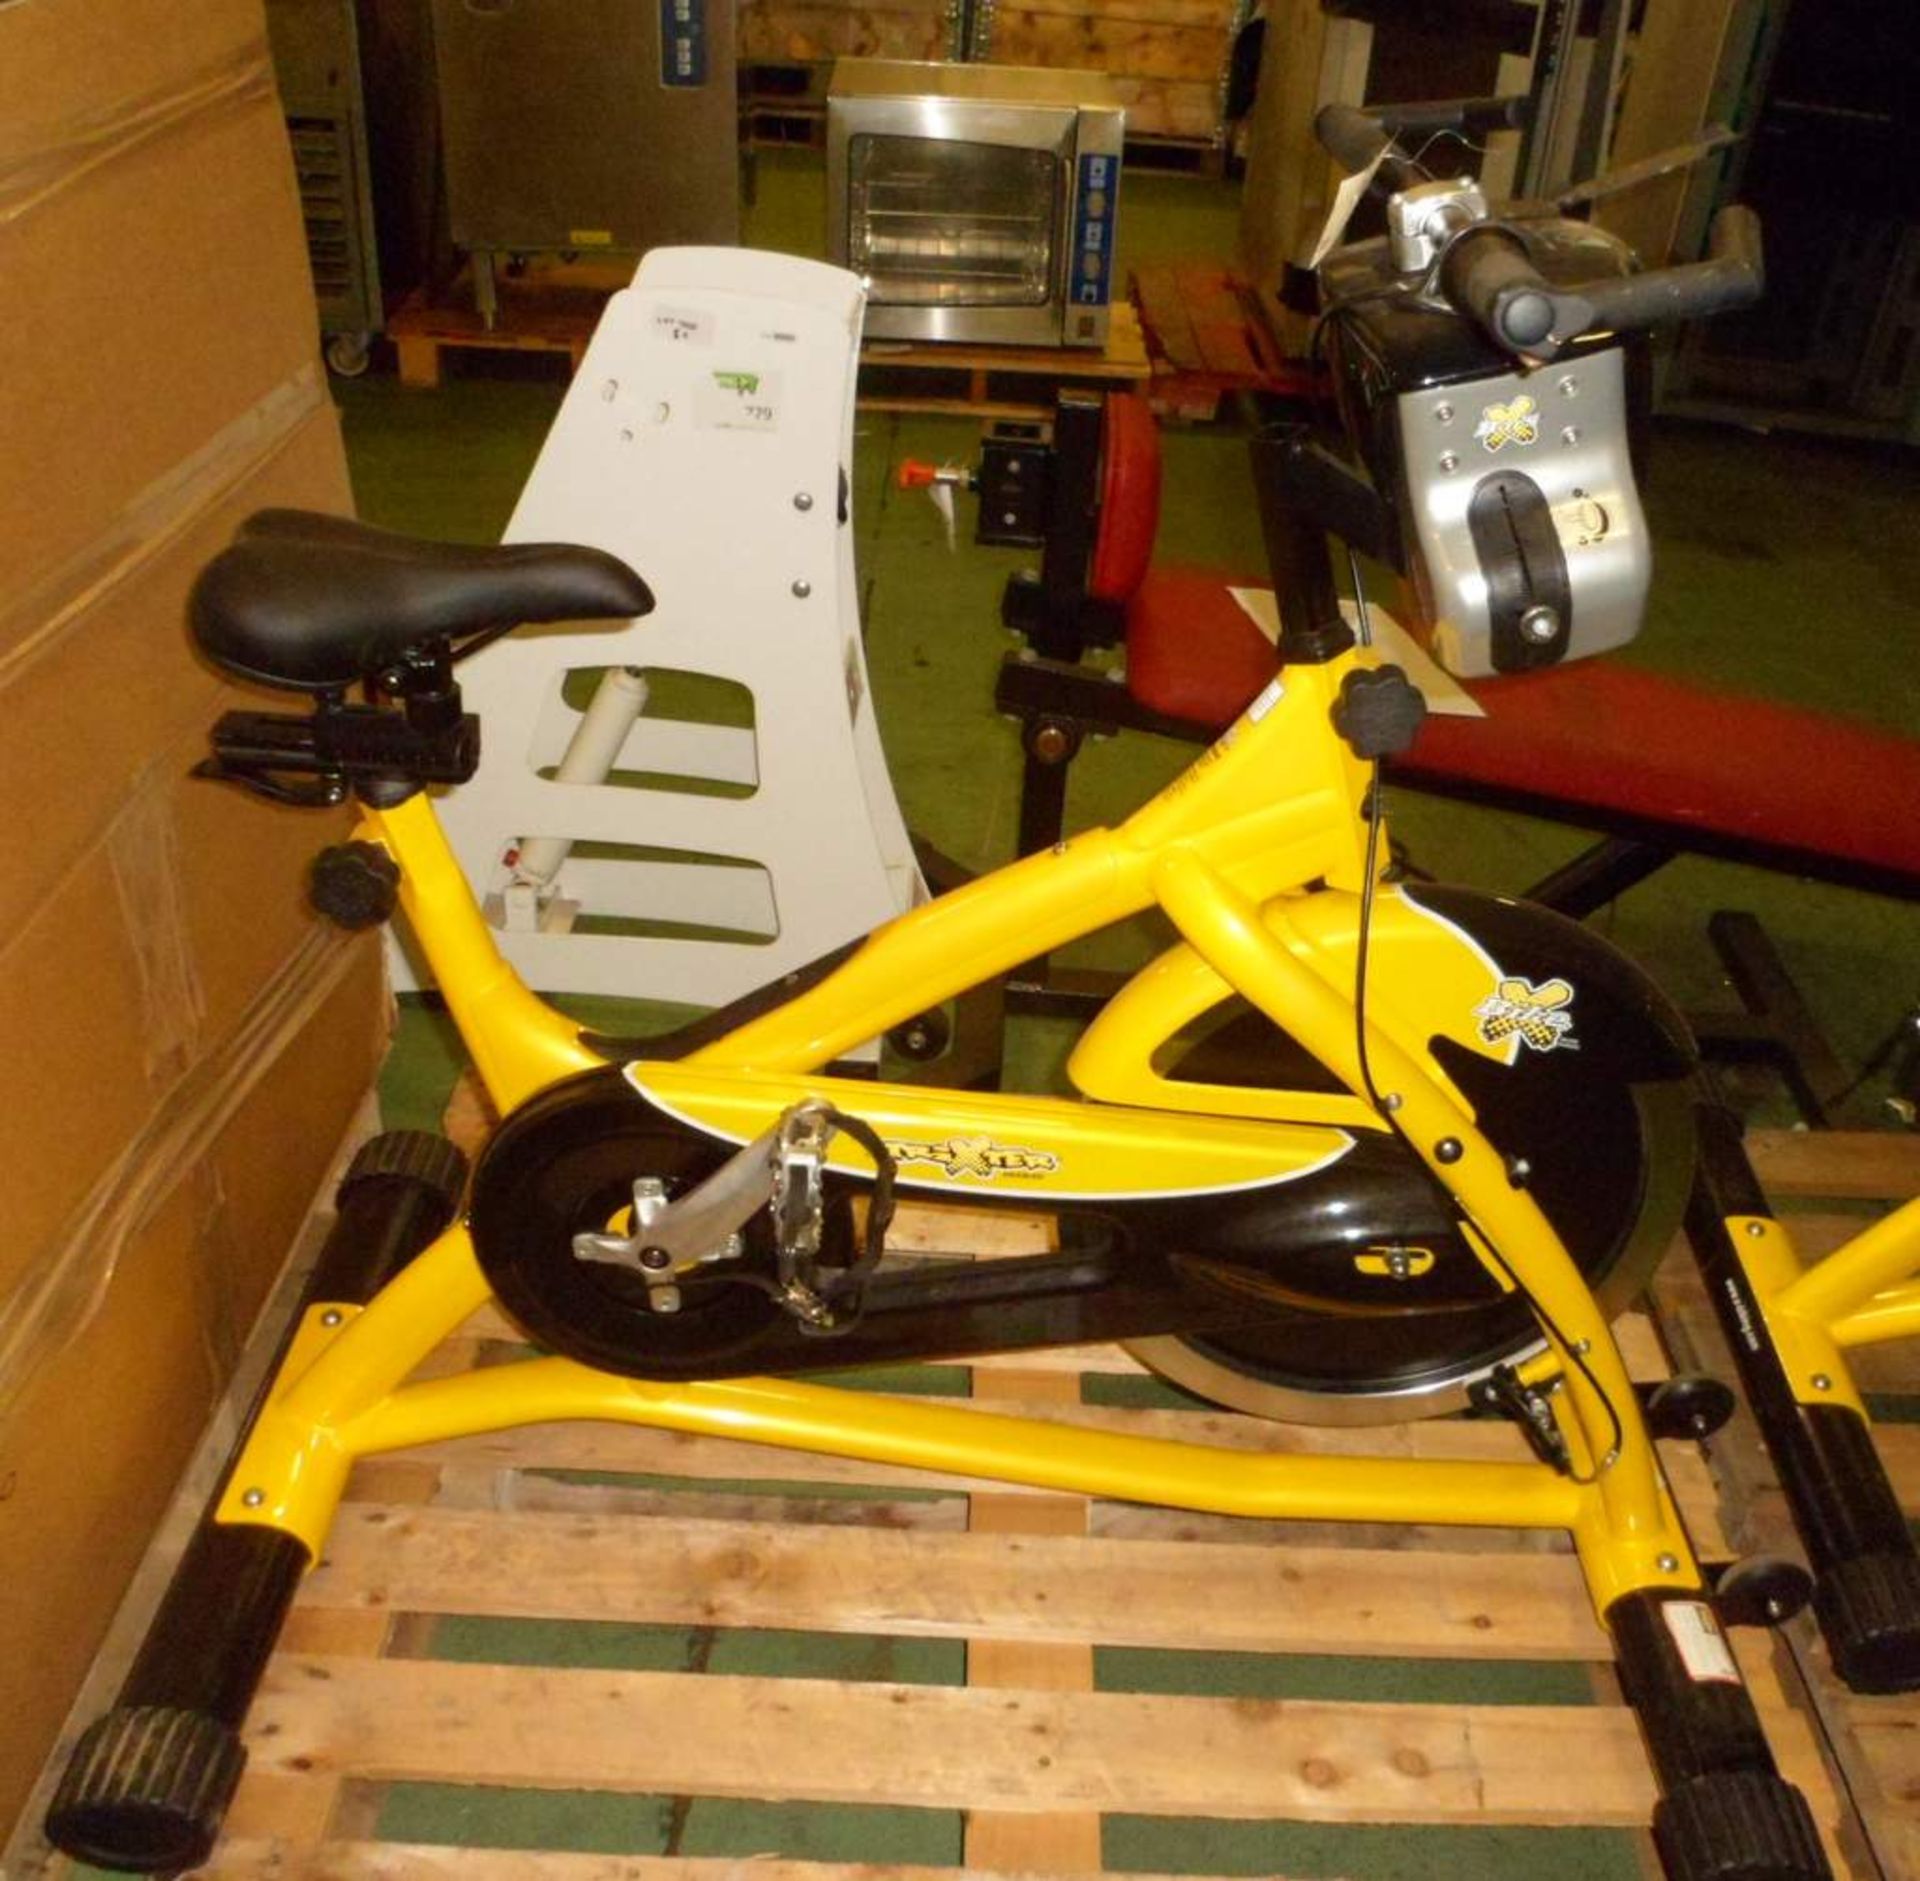 Trixter enabled exercise bike